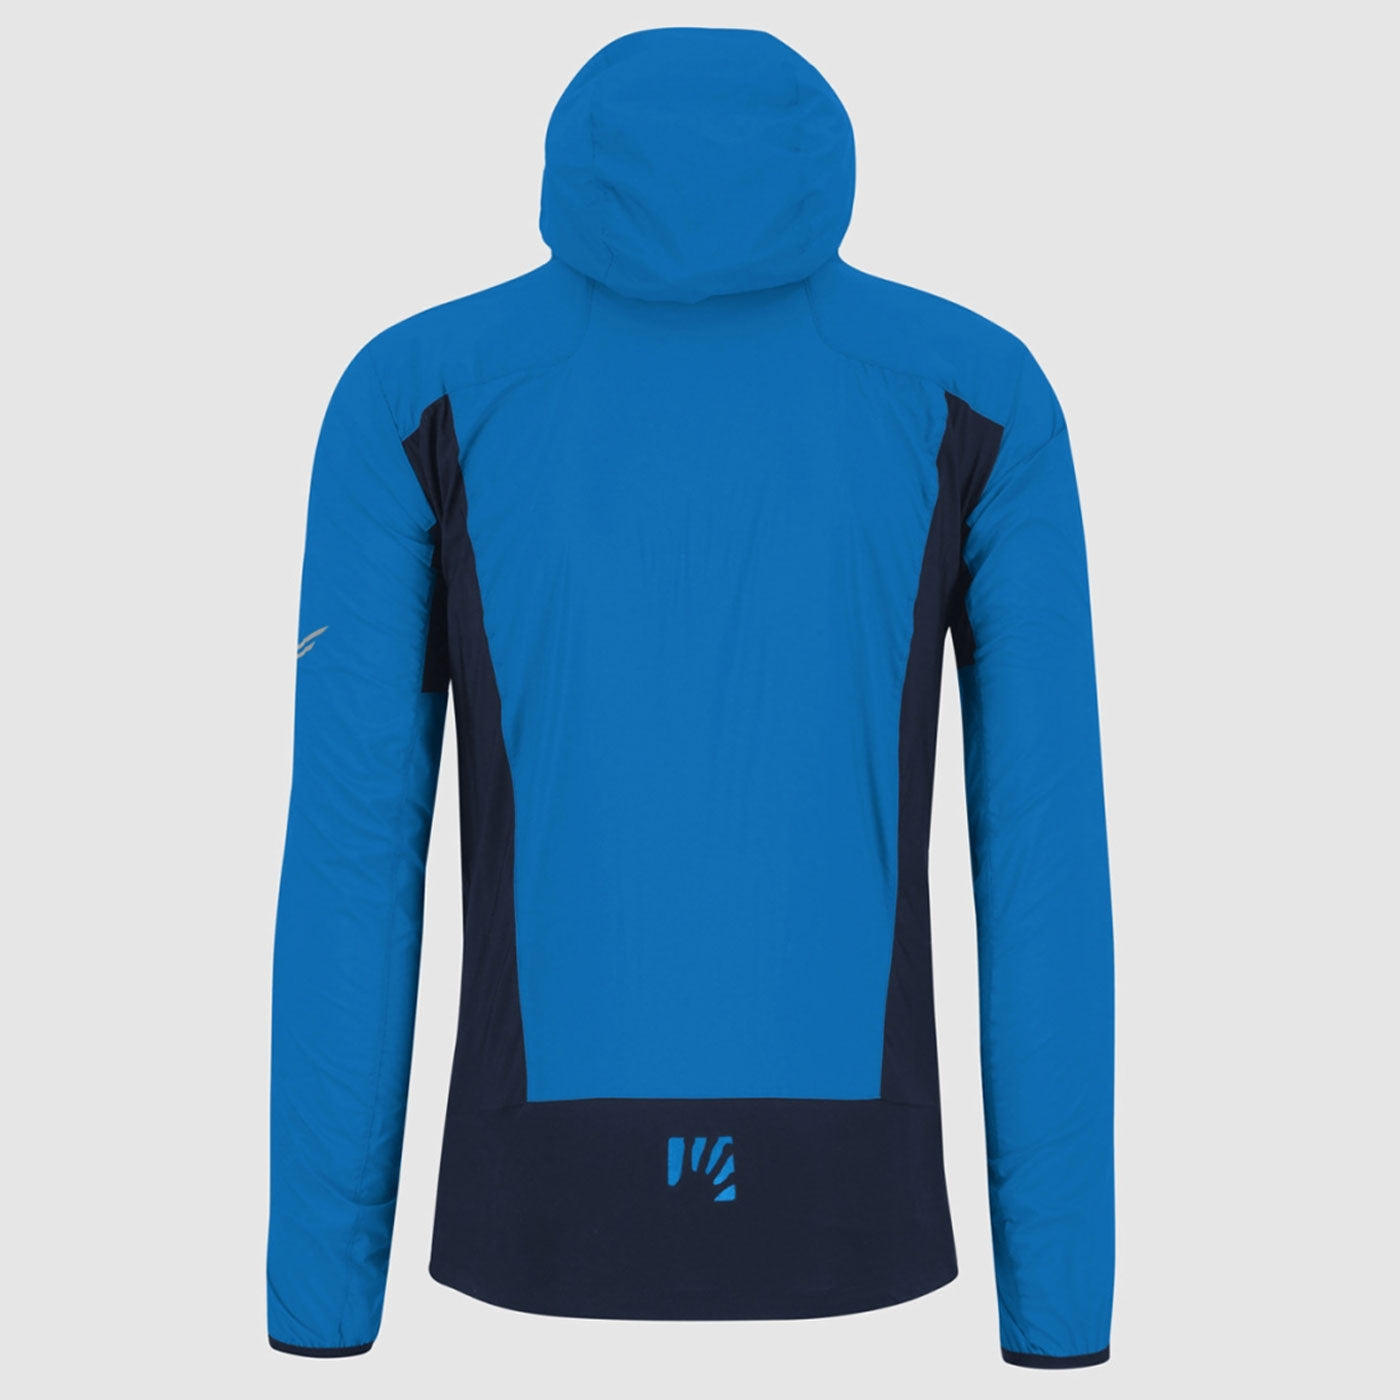 Karpos Lot Evo jacket - Light blue blue | All4cycling